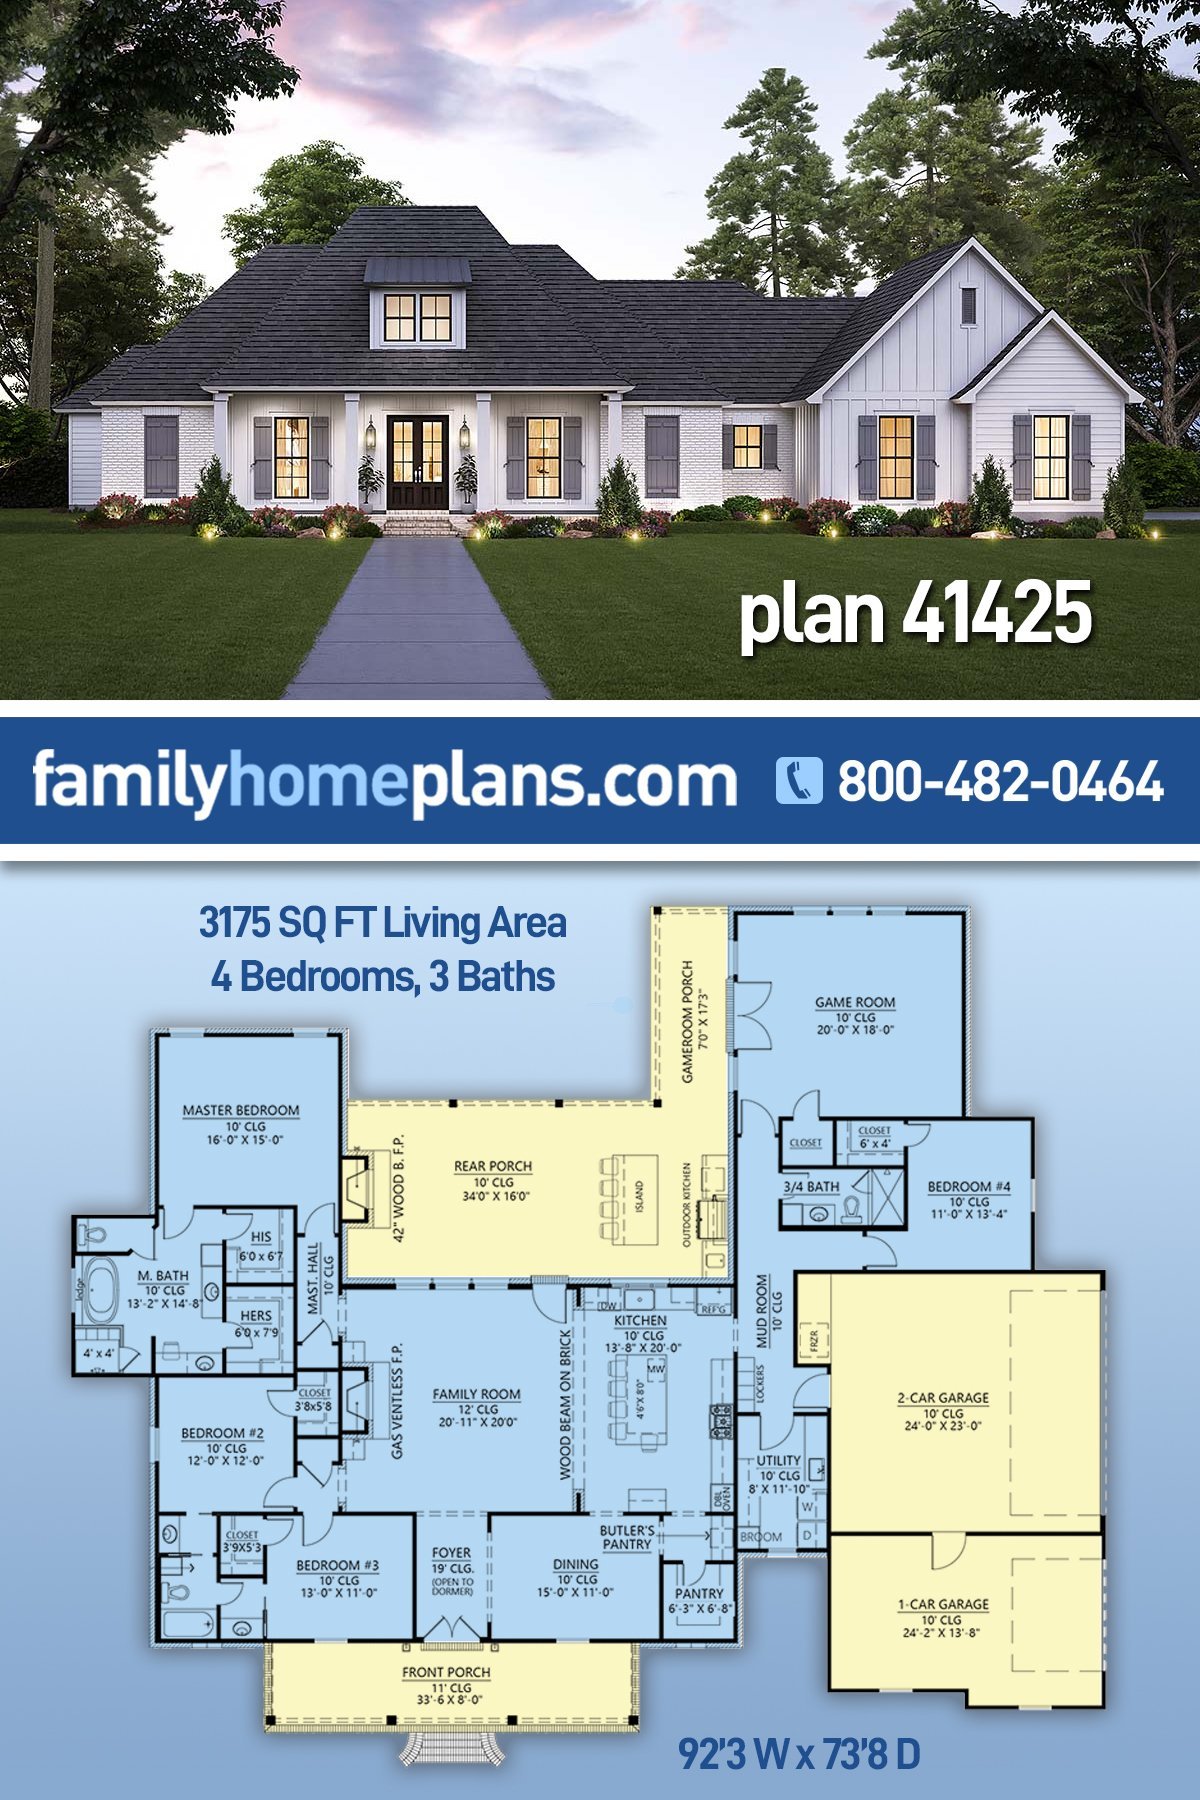 House Plan 41425